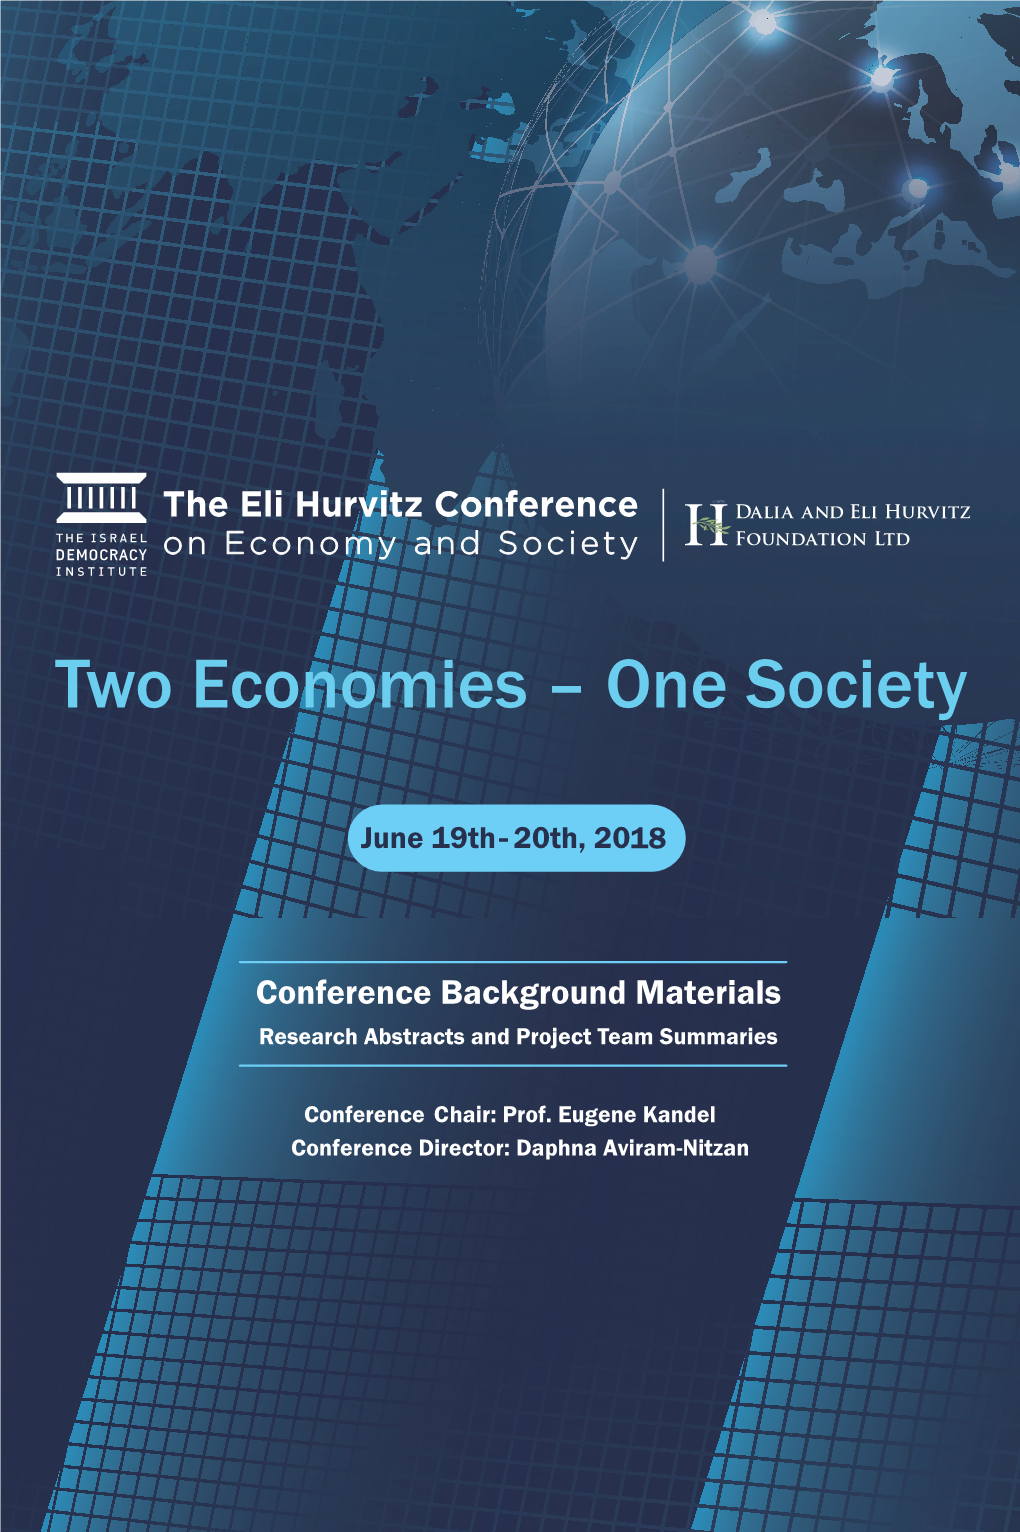 The Eli Hurvitz Conference on Economy and Society